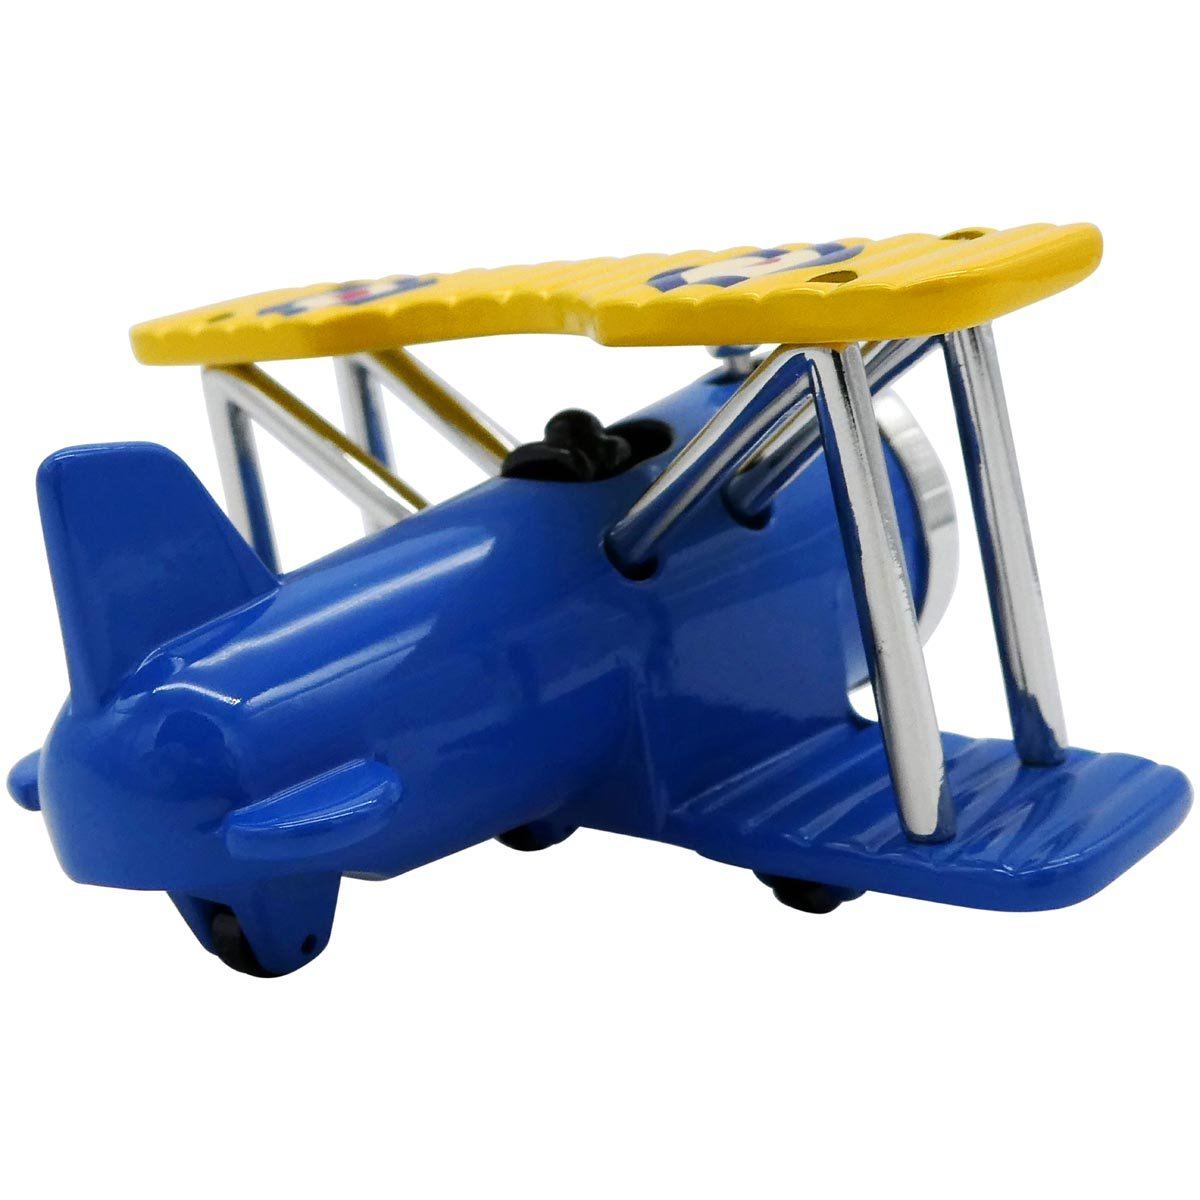 Pilot Toys Blue and Yellow Biplane Desk Clock